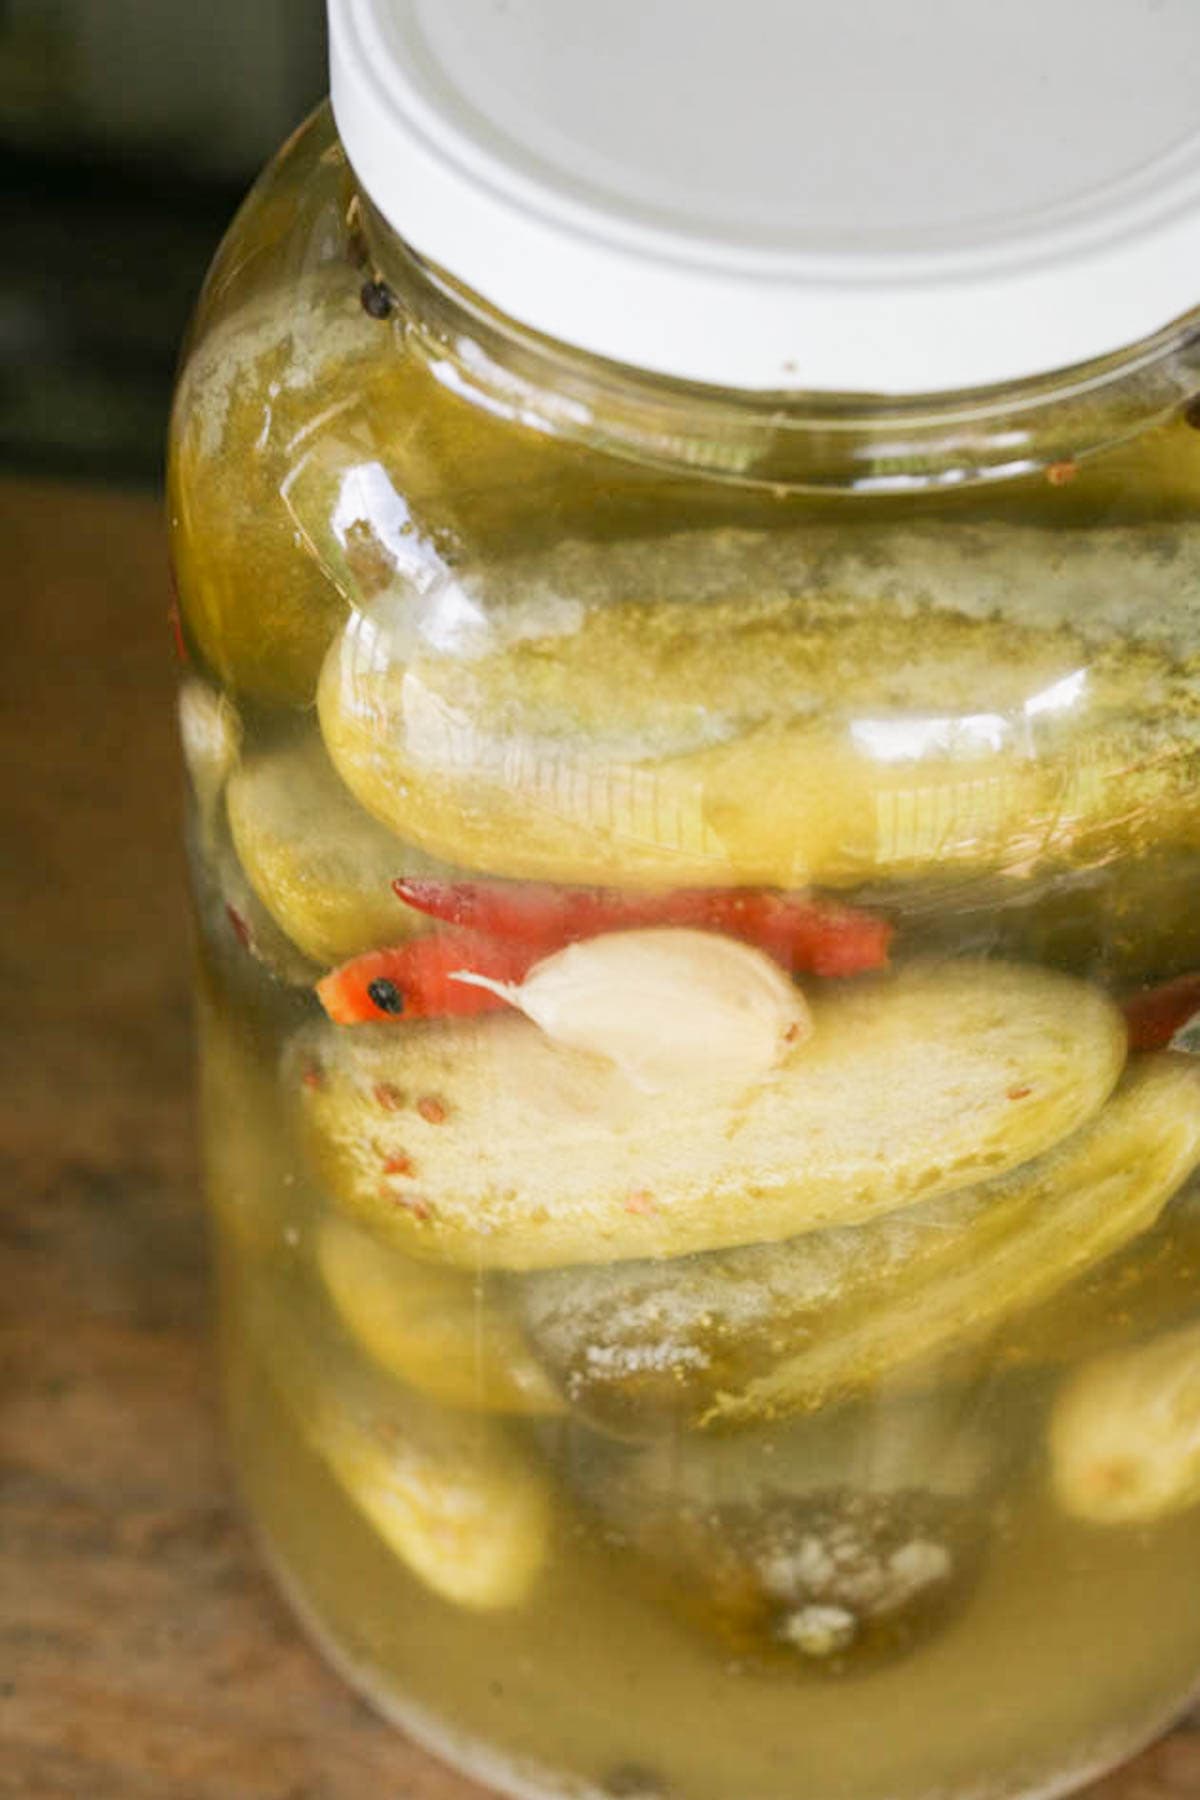 Israeli pickles ready for serving.